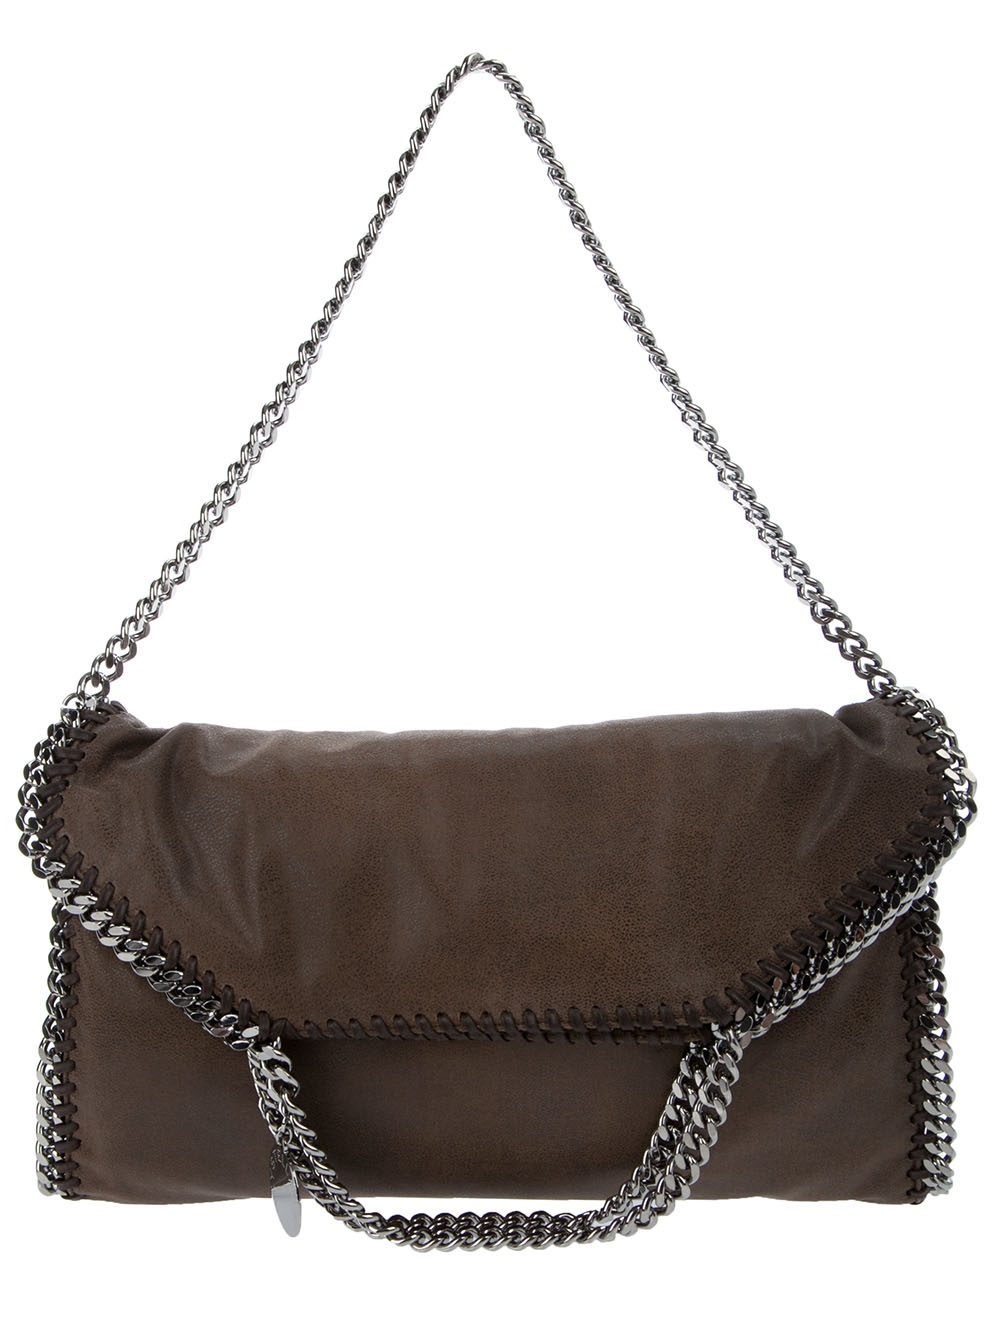 Stella Mccartney Chain Detail Bag in Brown | Lyst